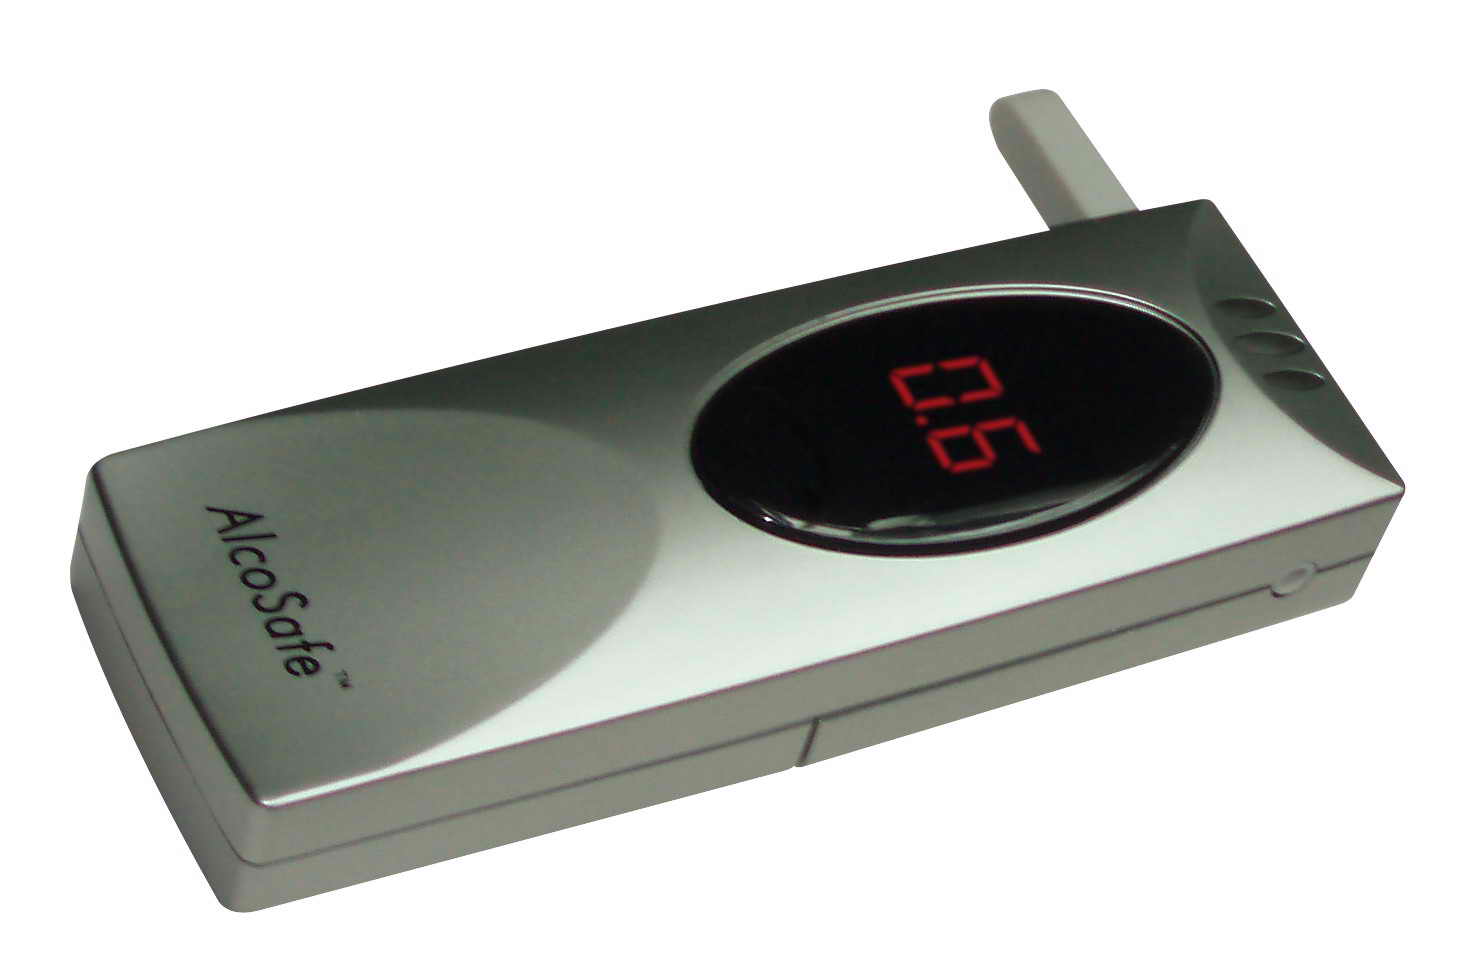  Digital Alcohol Breath Tester (Цифровые Алкоголь Breath Tester)